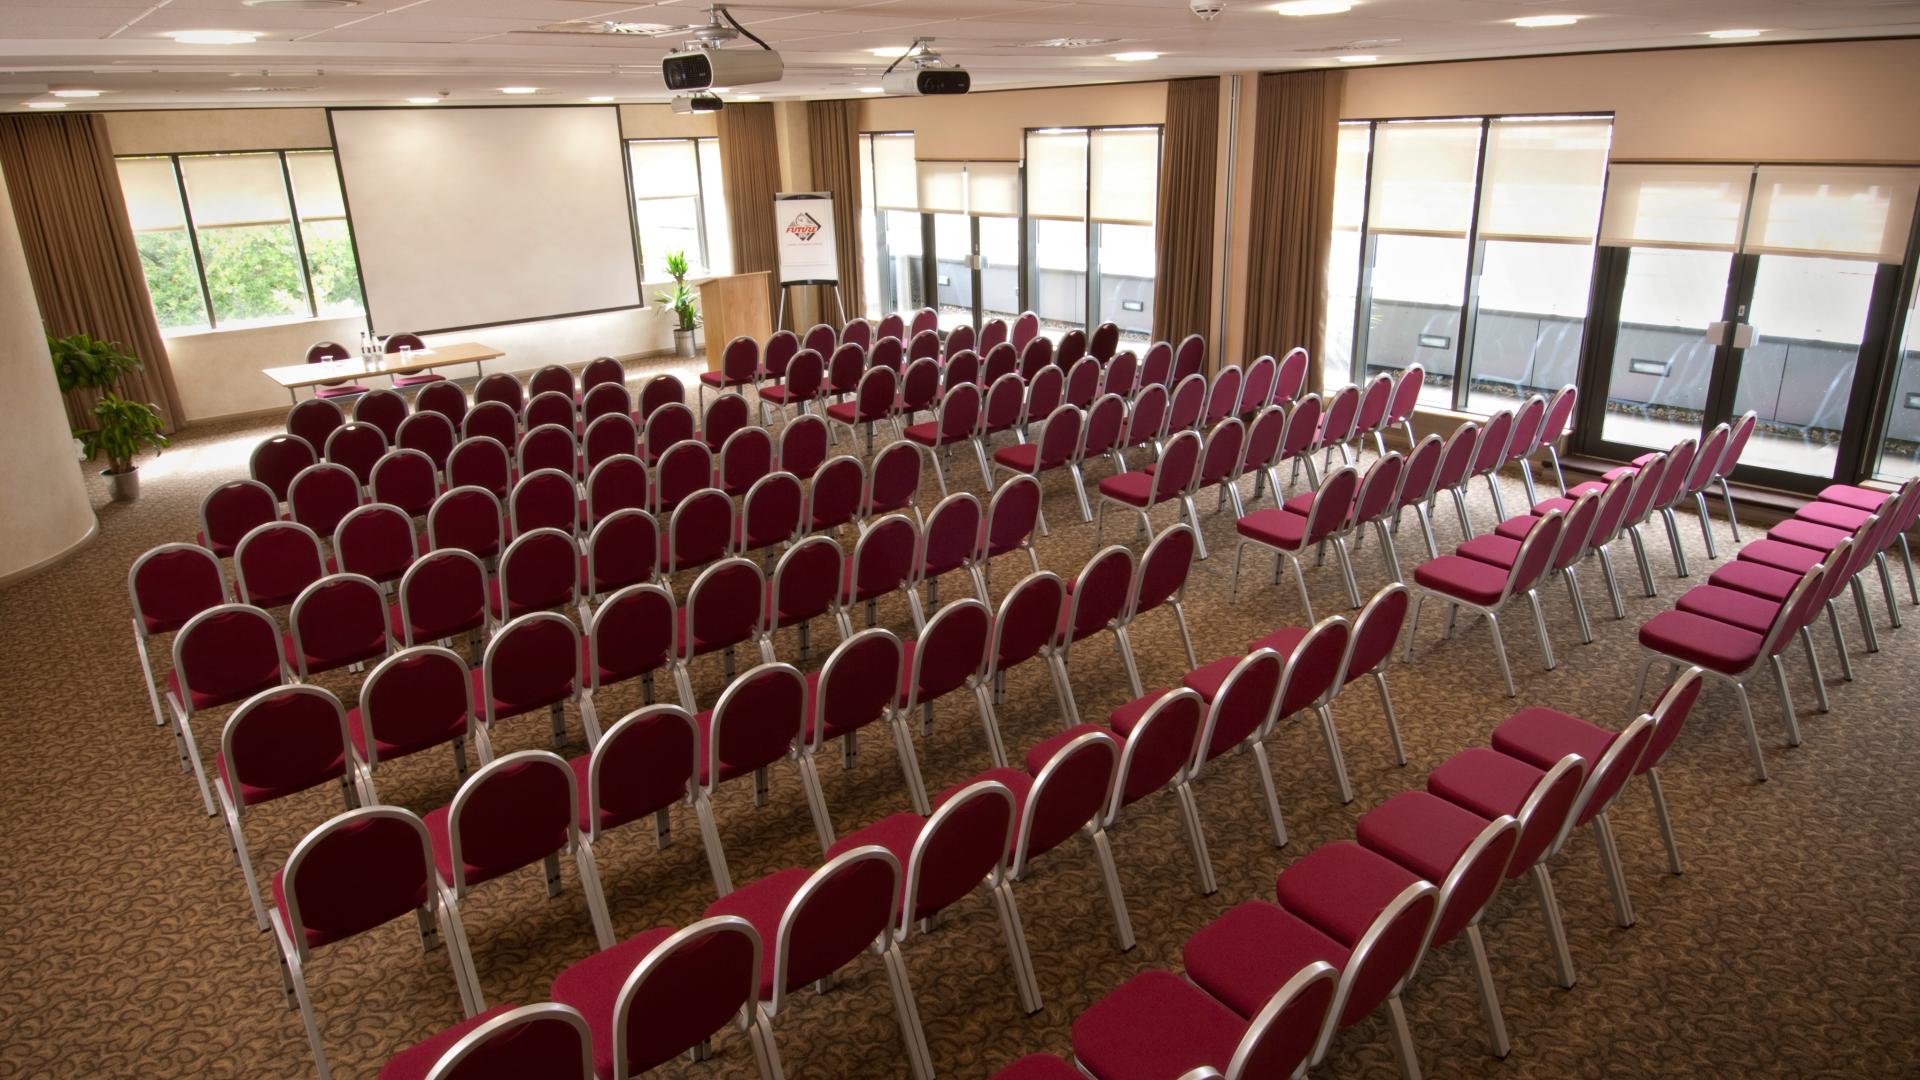 Find your Conference Venue in Bristol